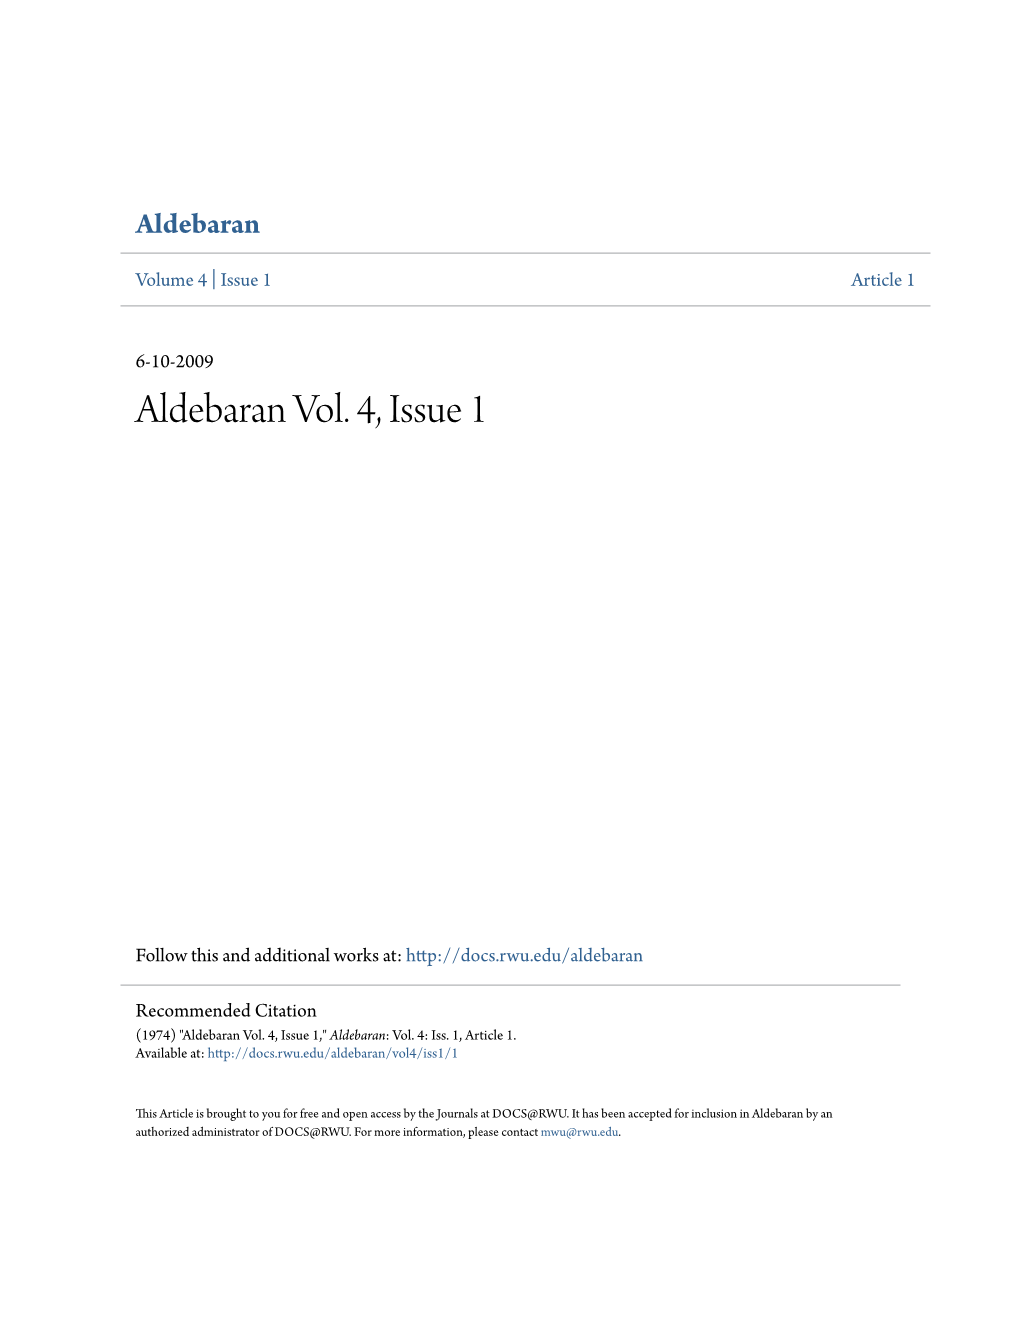 Aldebaran Vol. 4, Issue 1